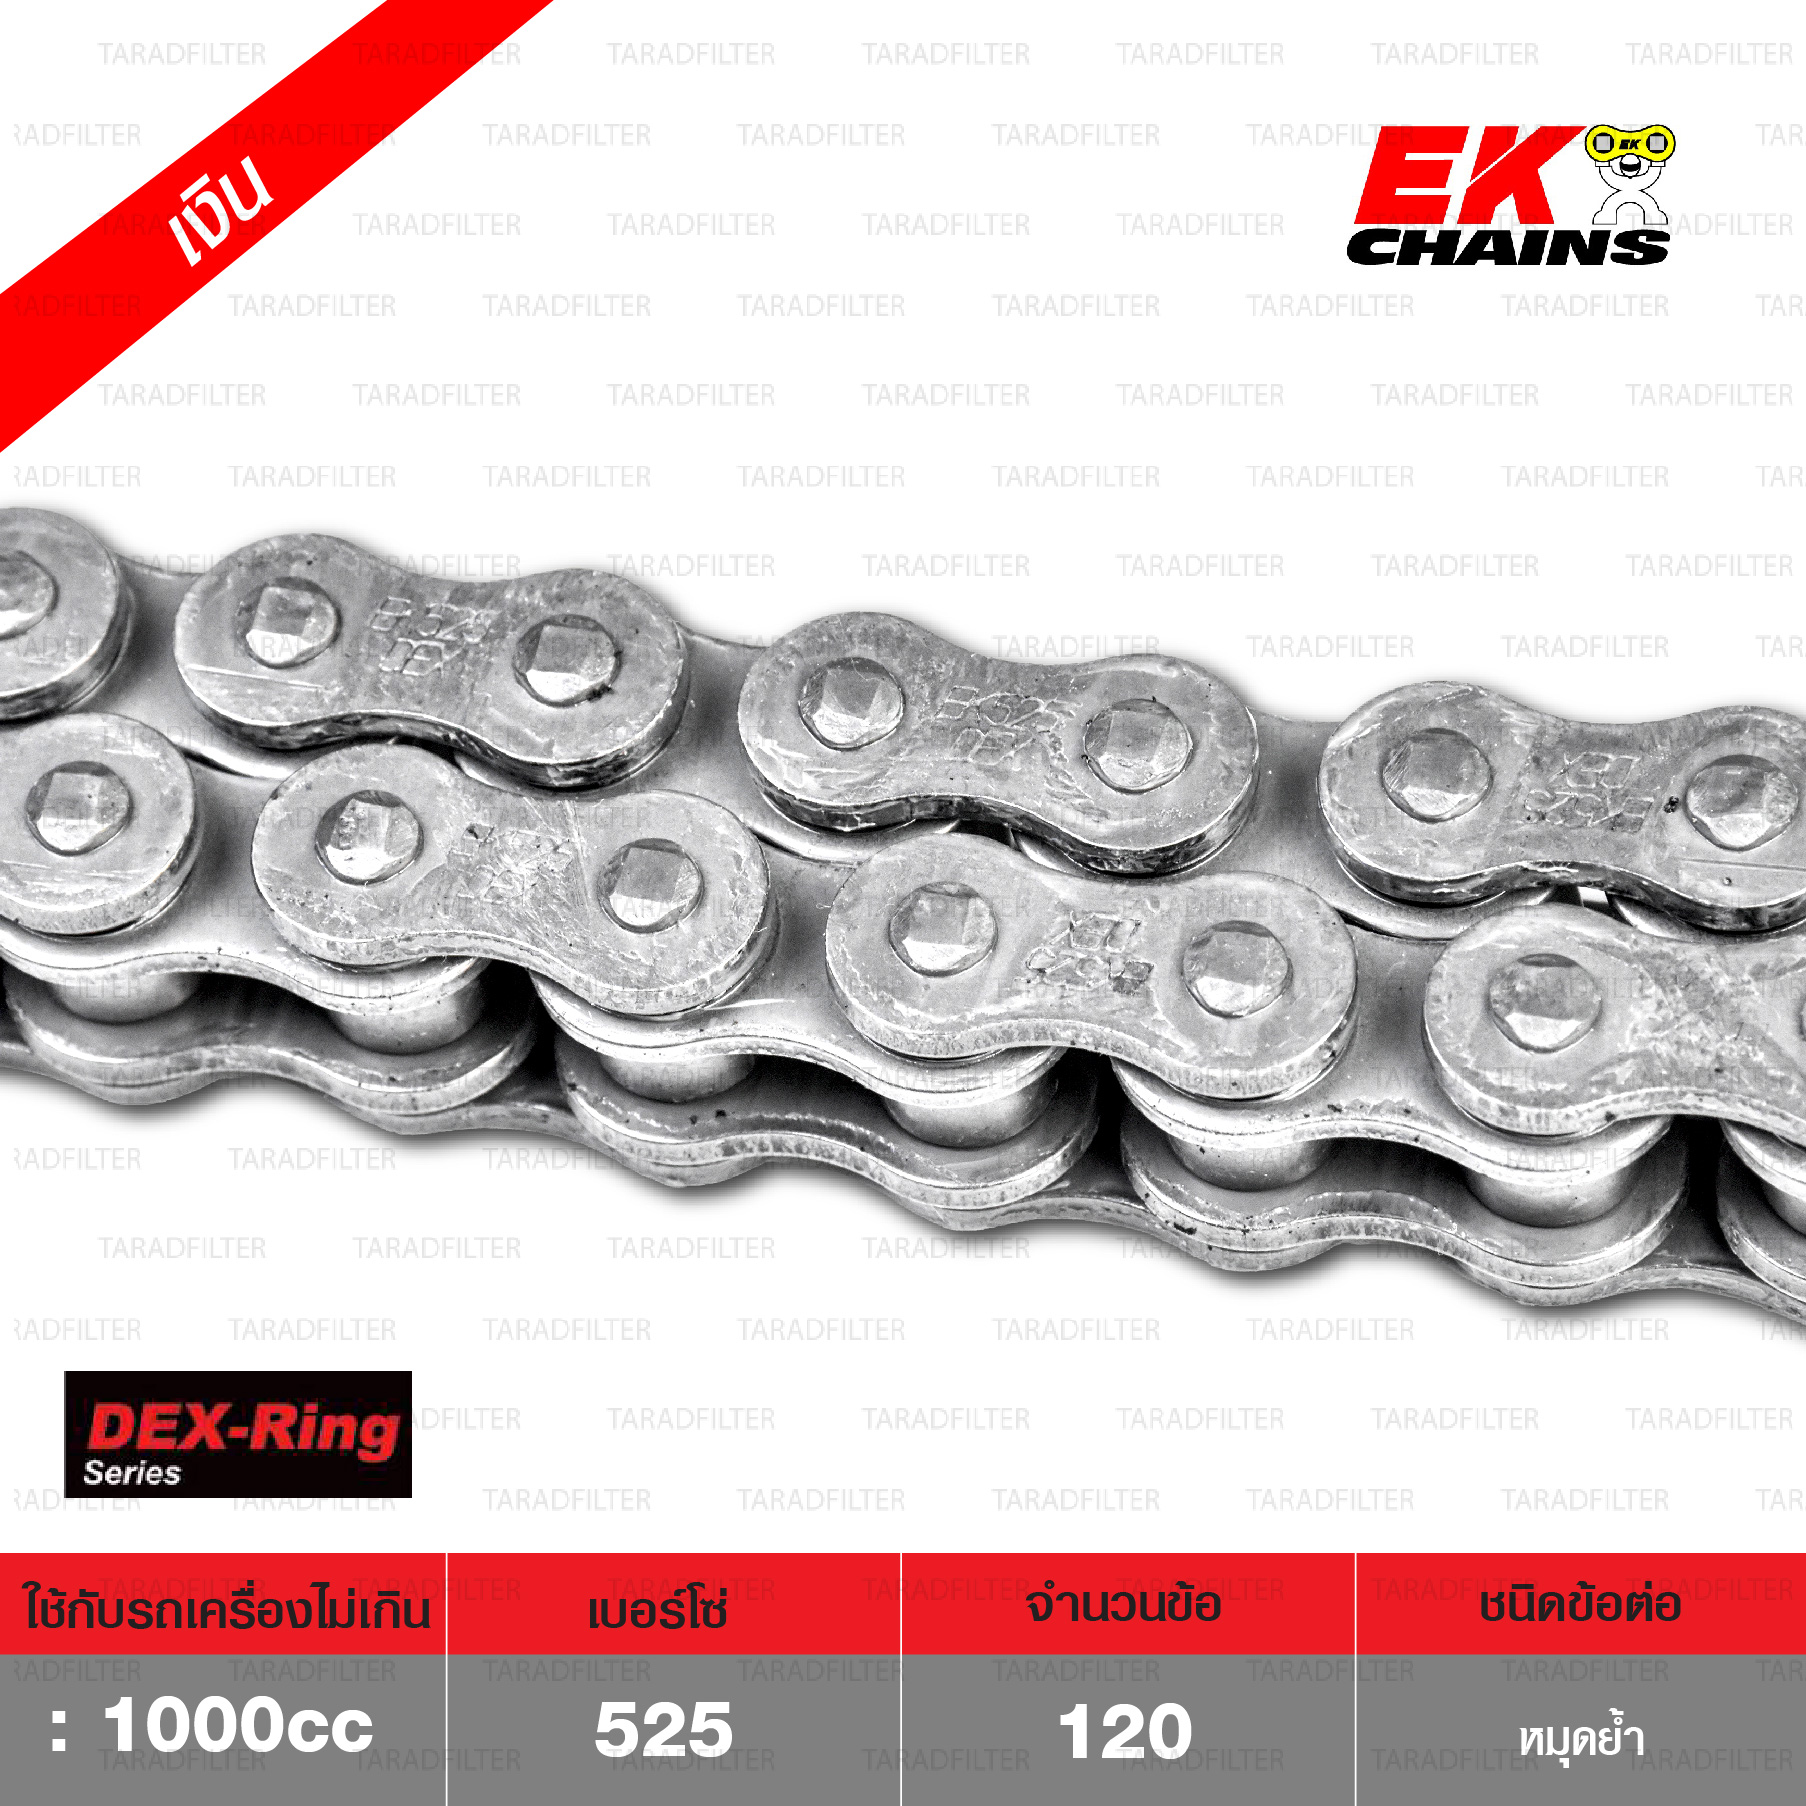 EK โซ่มอเตอร์ไซค์ บิ๊กไบค์ เบอร์ 525 QX-ring รุ่น DEX SERIES สีเหล็ก 120 ข้อ ข้อต่อแบบหมุดย้ำ [ 525-120 DEX STD ]